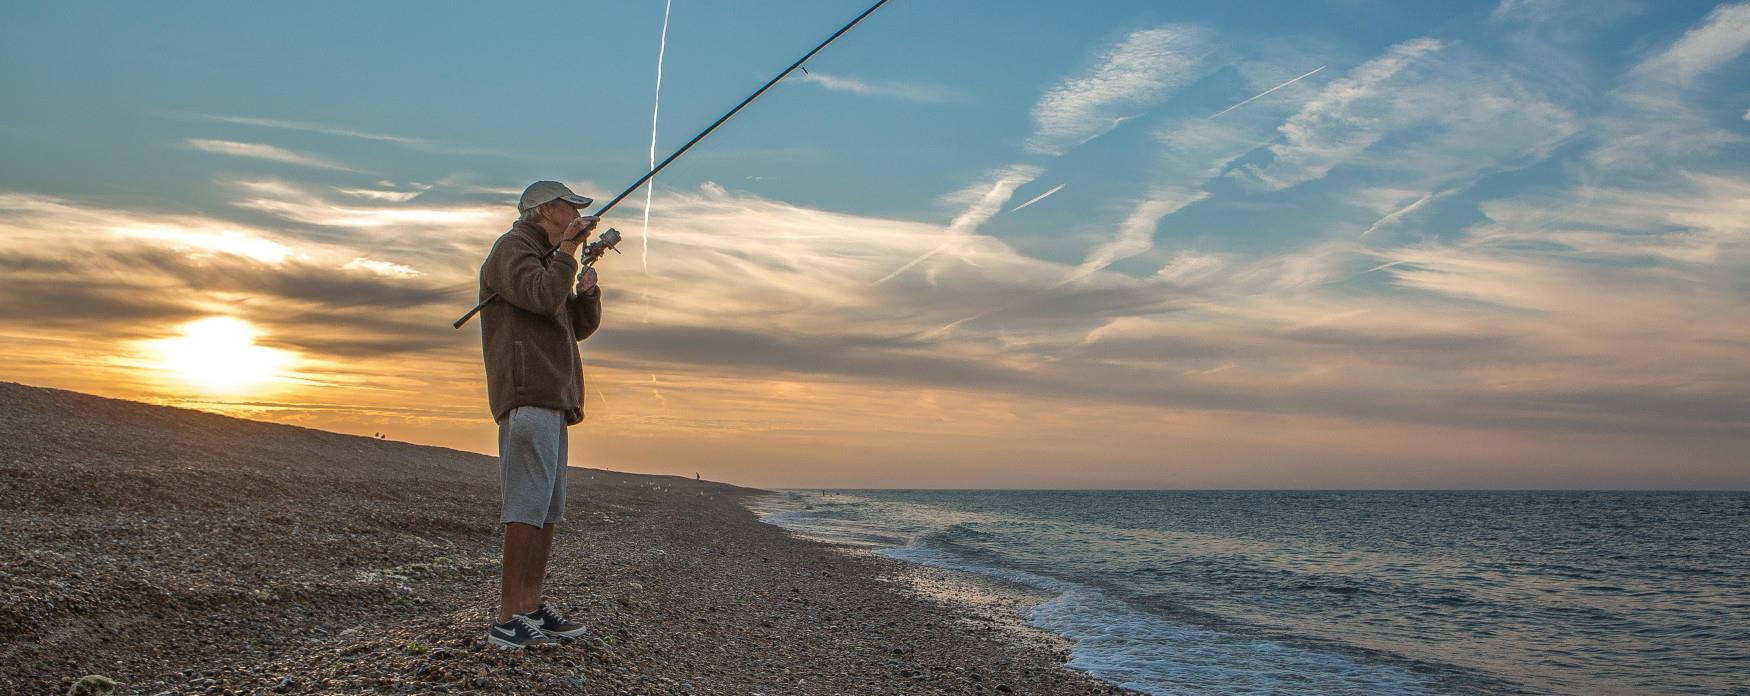 Fishing in North Norfolk